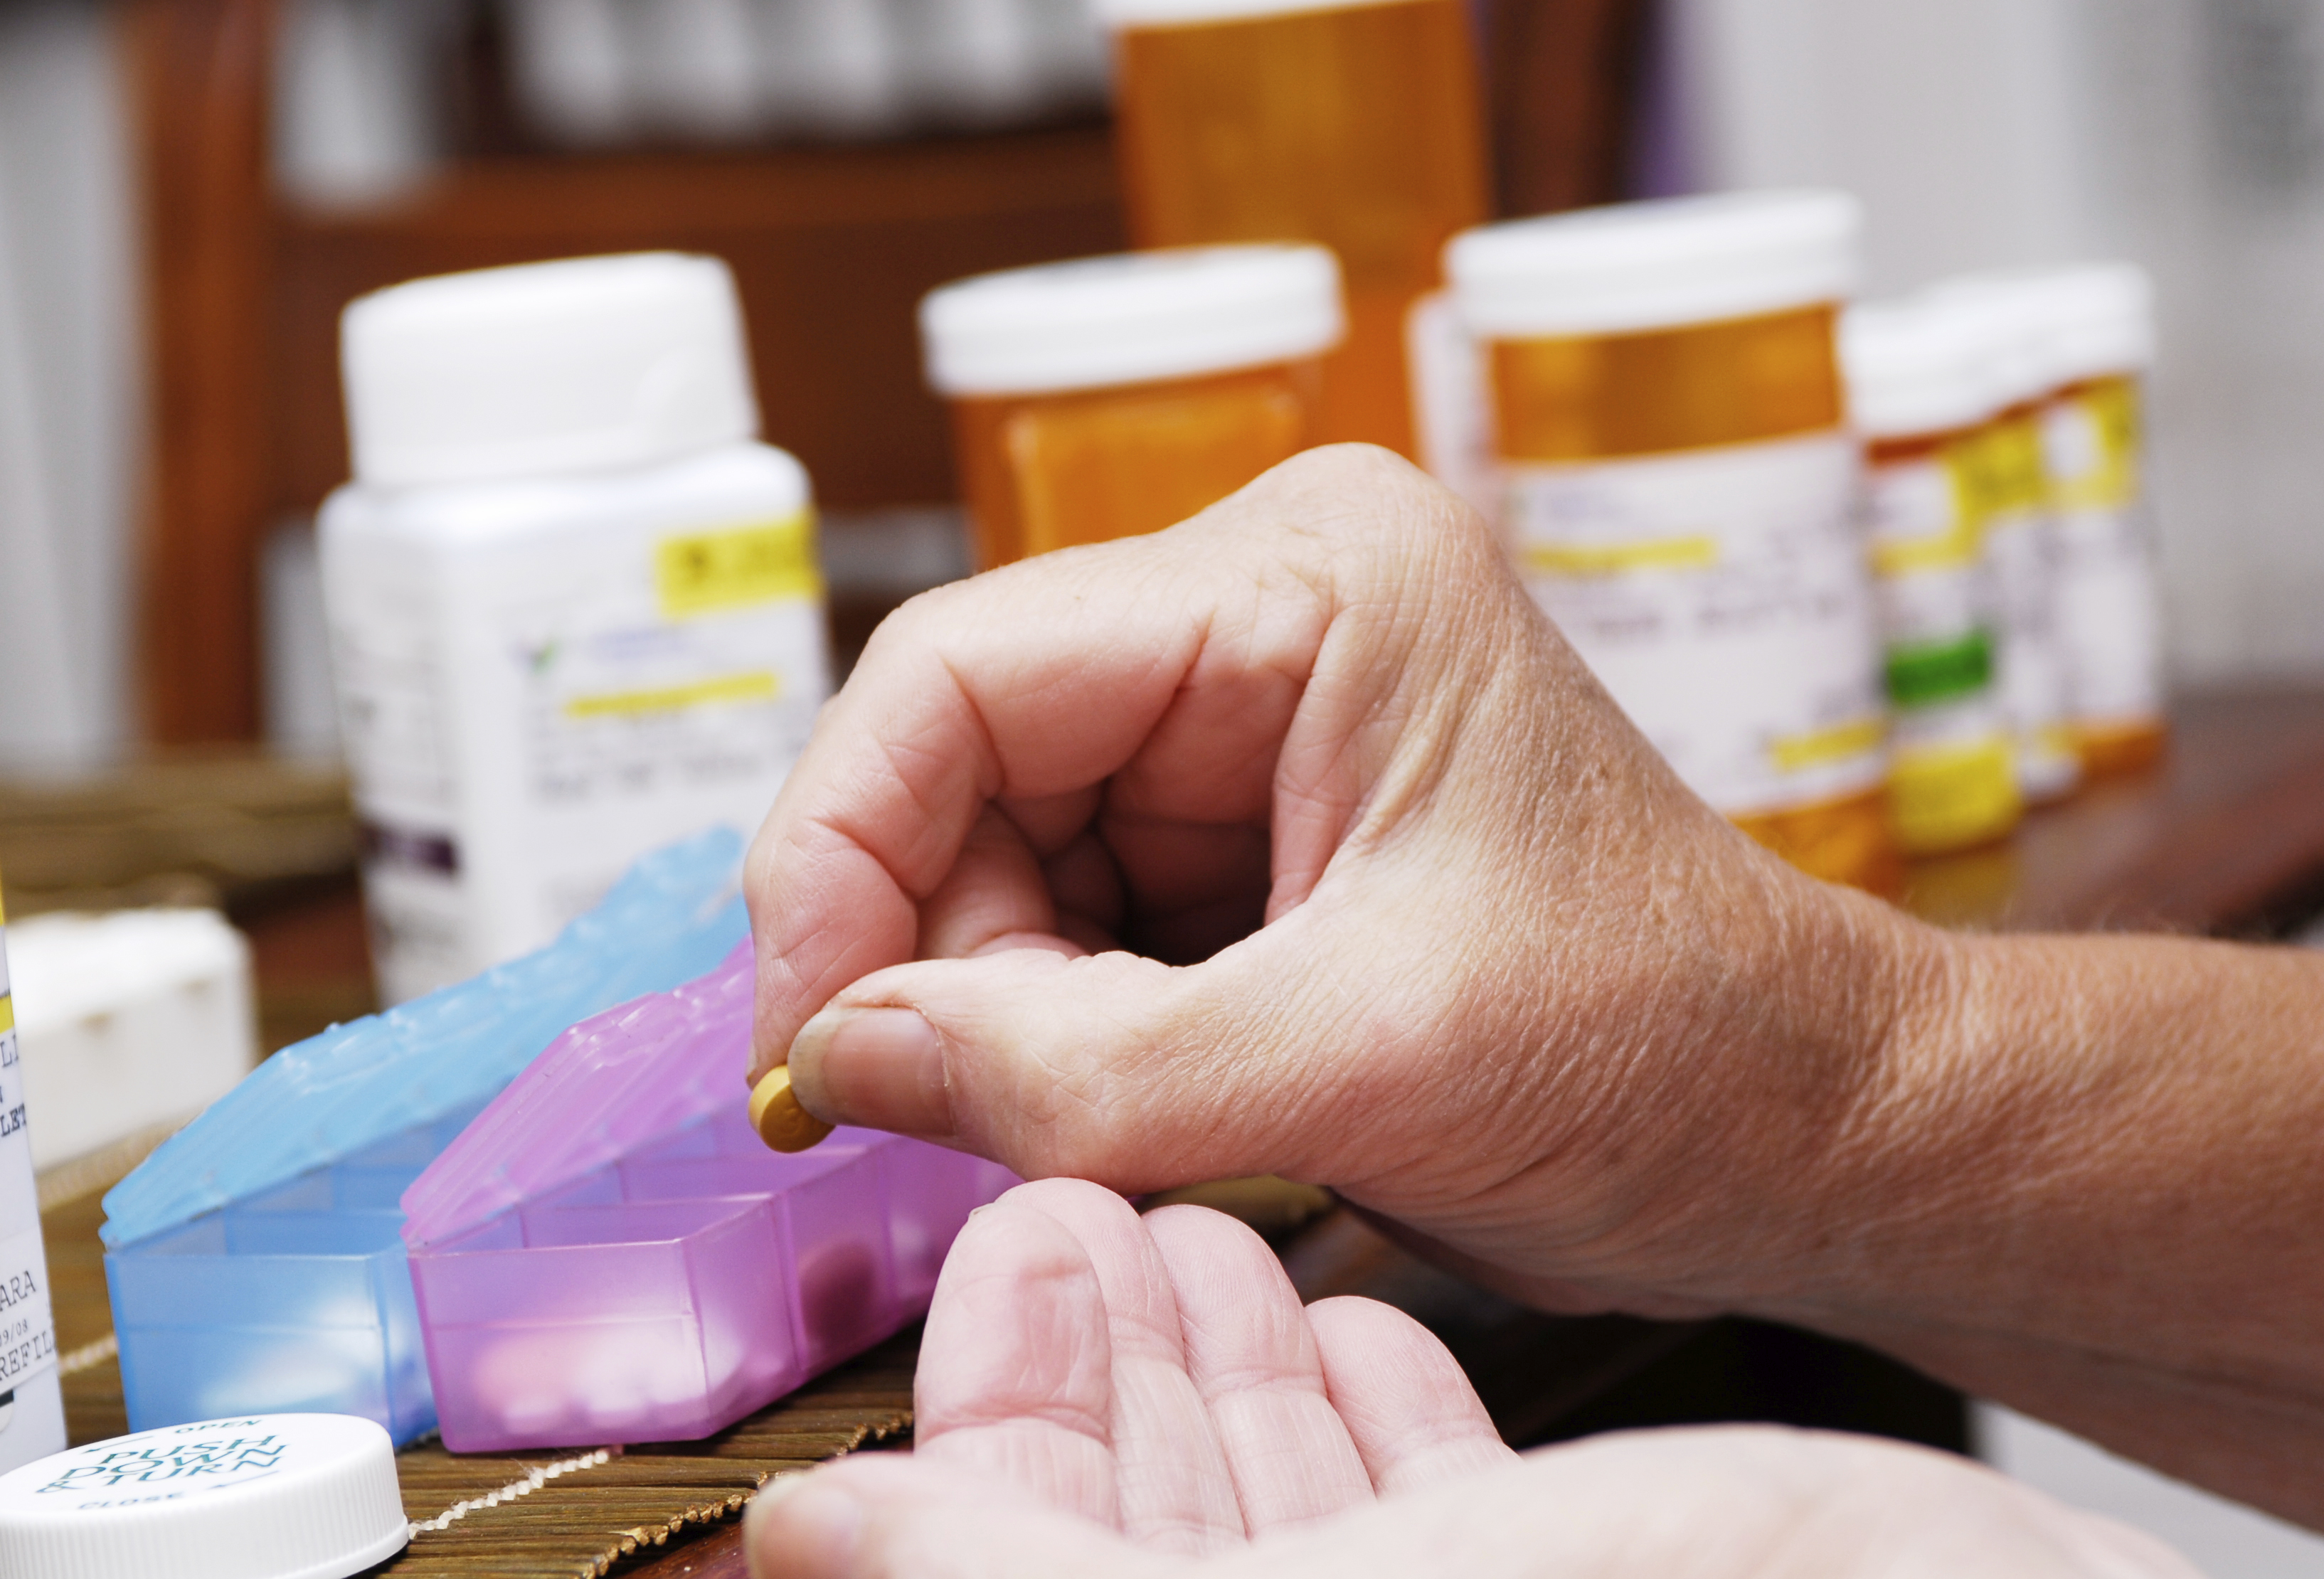 Do you take prescription medication?